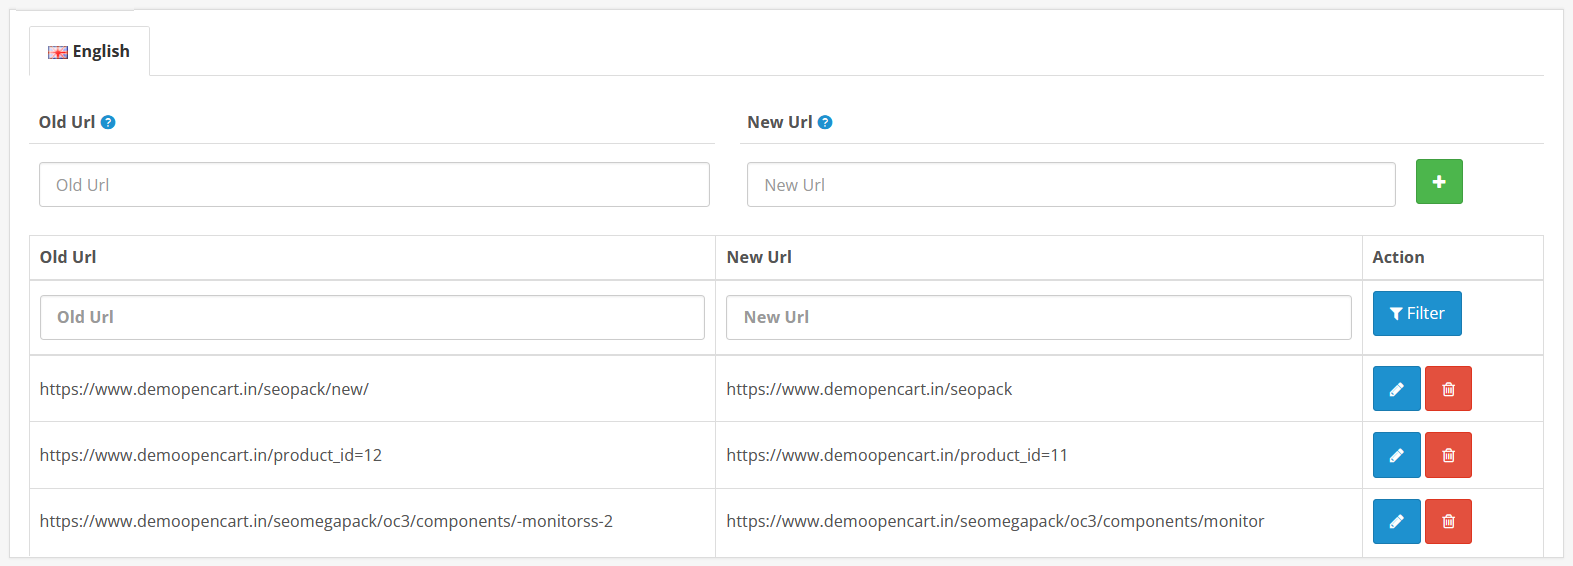 applying redirect url 301 code in OpenCart using seo plugin